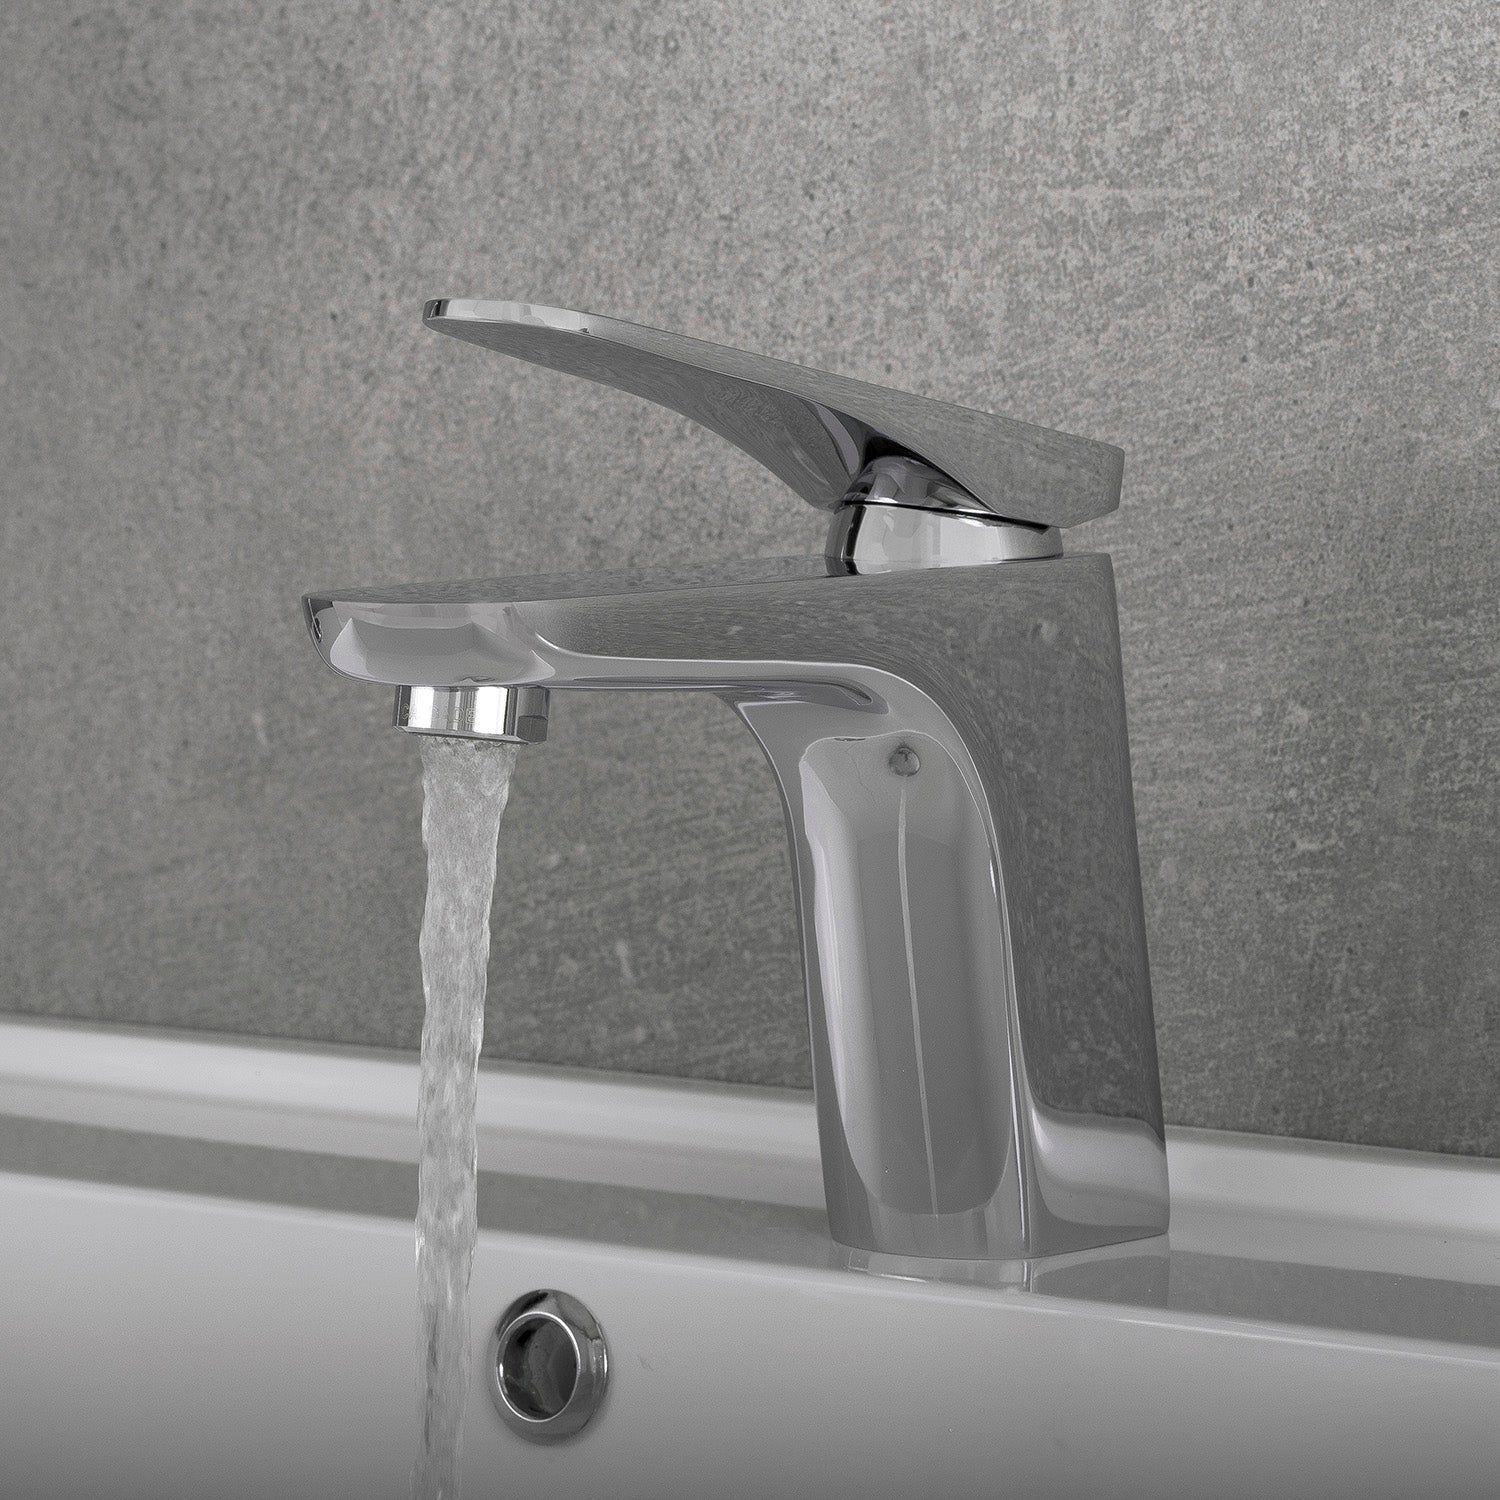 DAX Single Handle Bathroom Faucet, Brass Body, 6-7/8 x 5-5/16 Inches (DAX-805A)